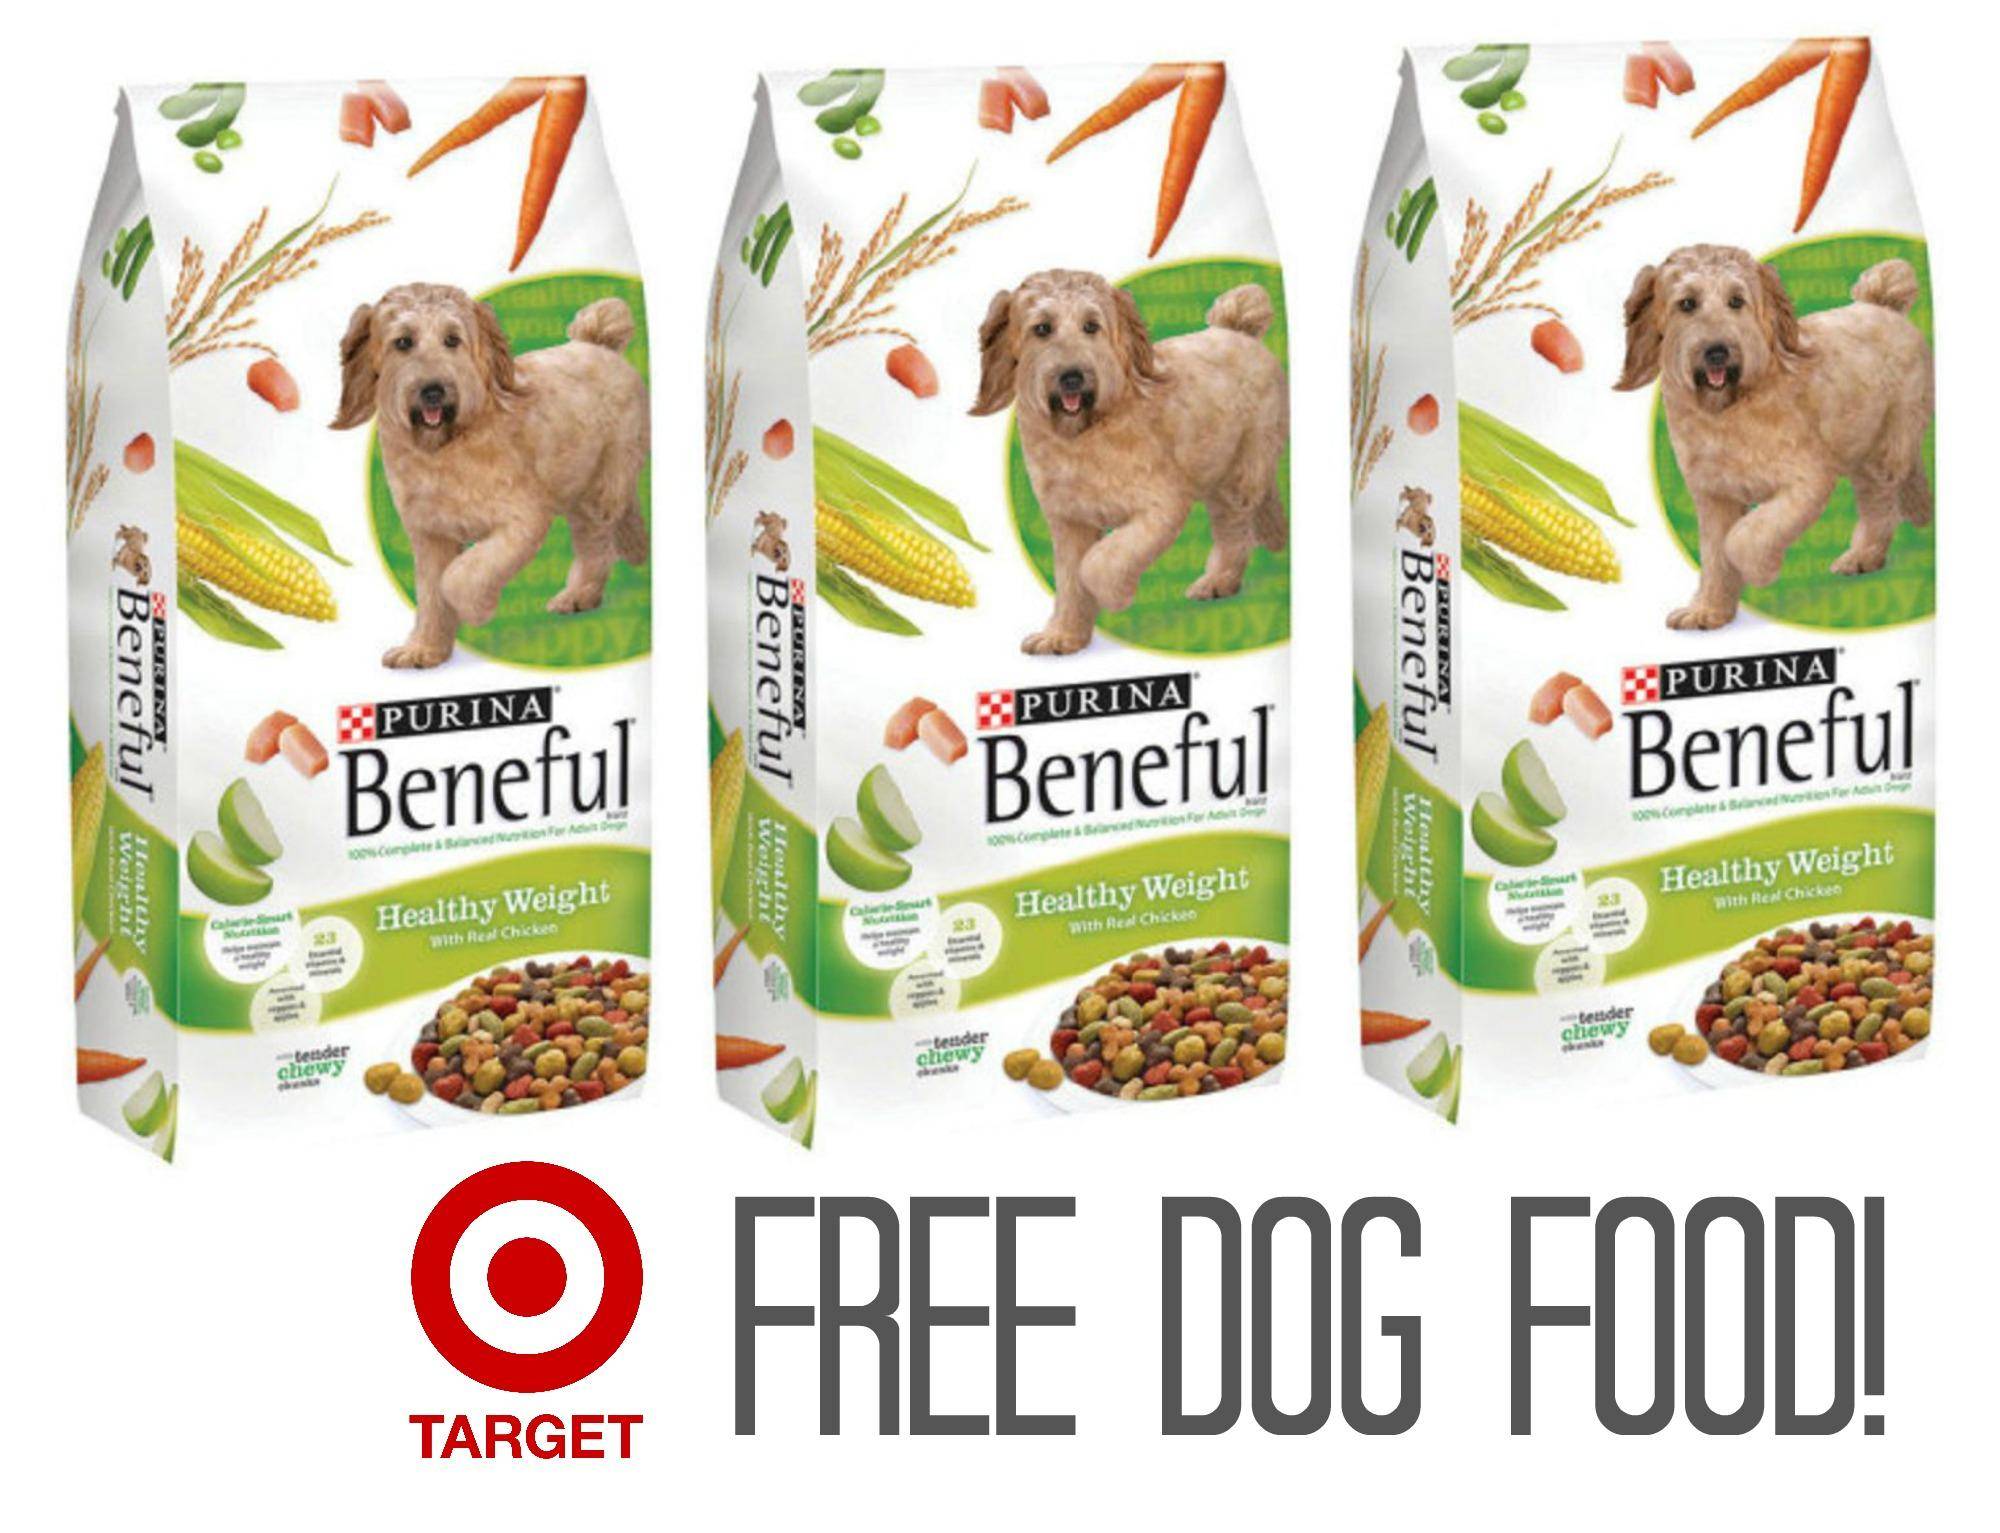 Purina Beneful Dry Dog Food FREE Target! Passion for Savings